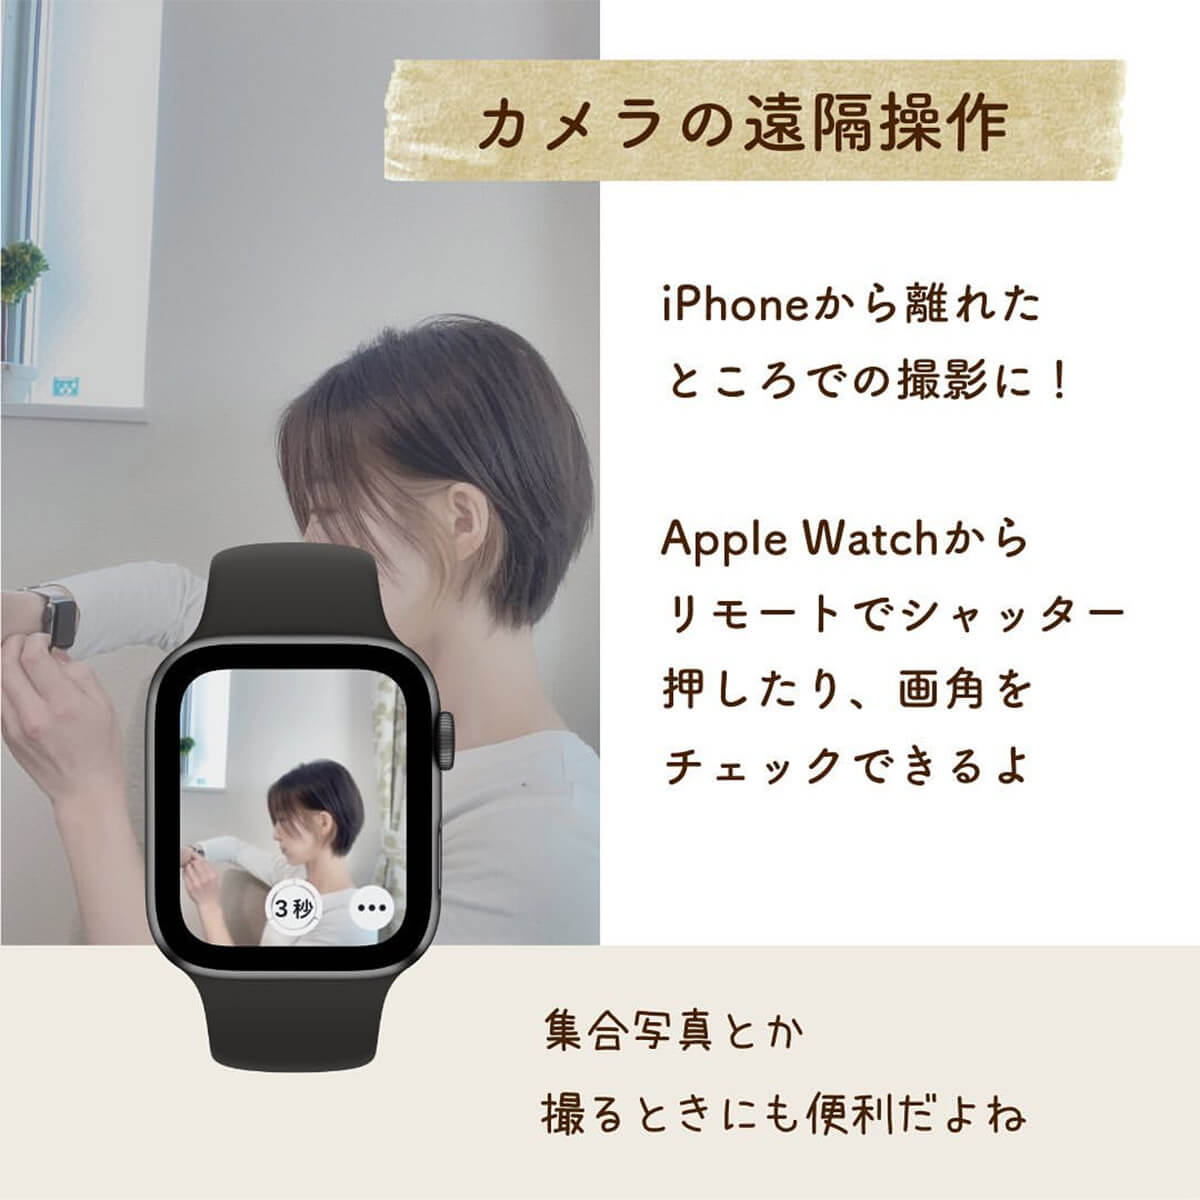 Apple Watch×iPhone連携ワザ6